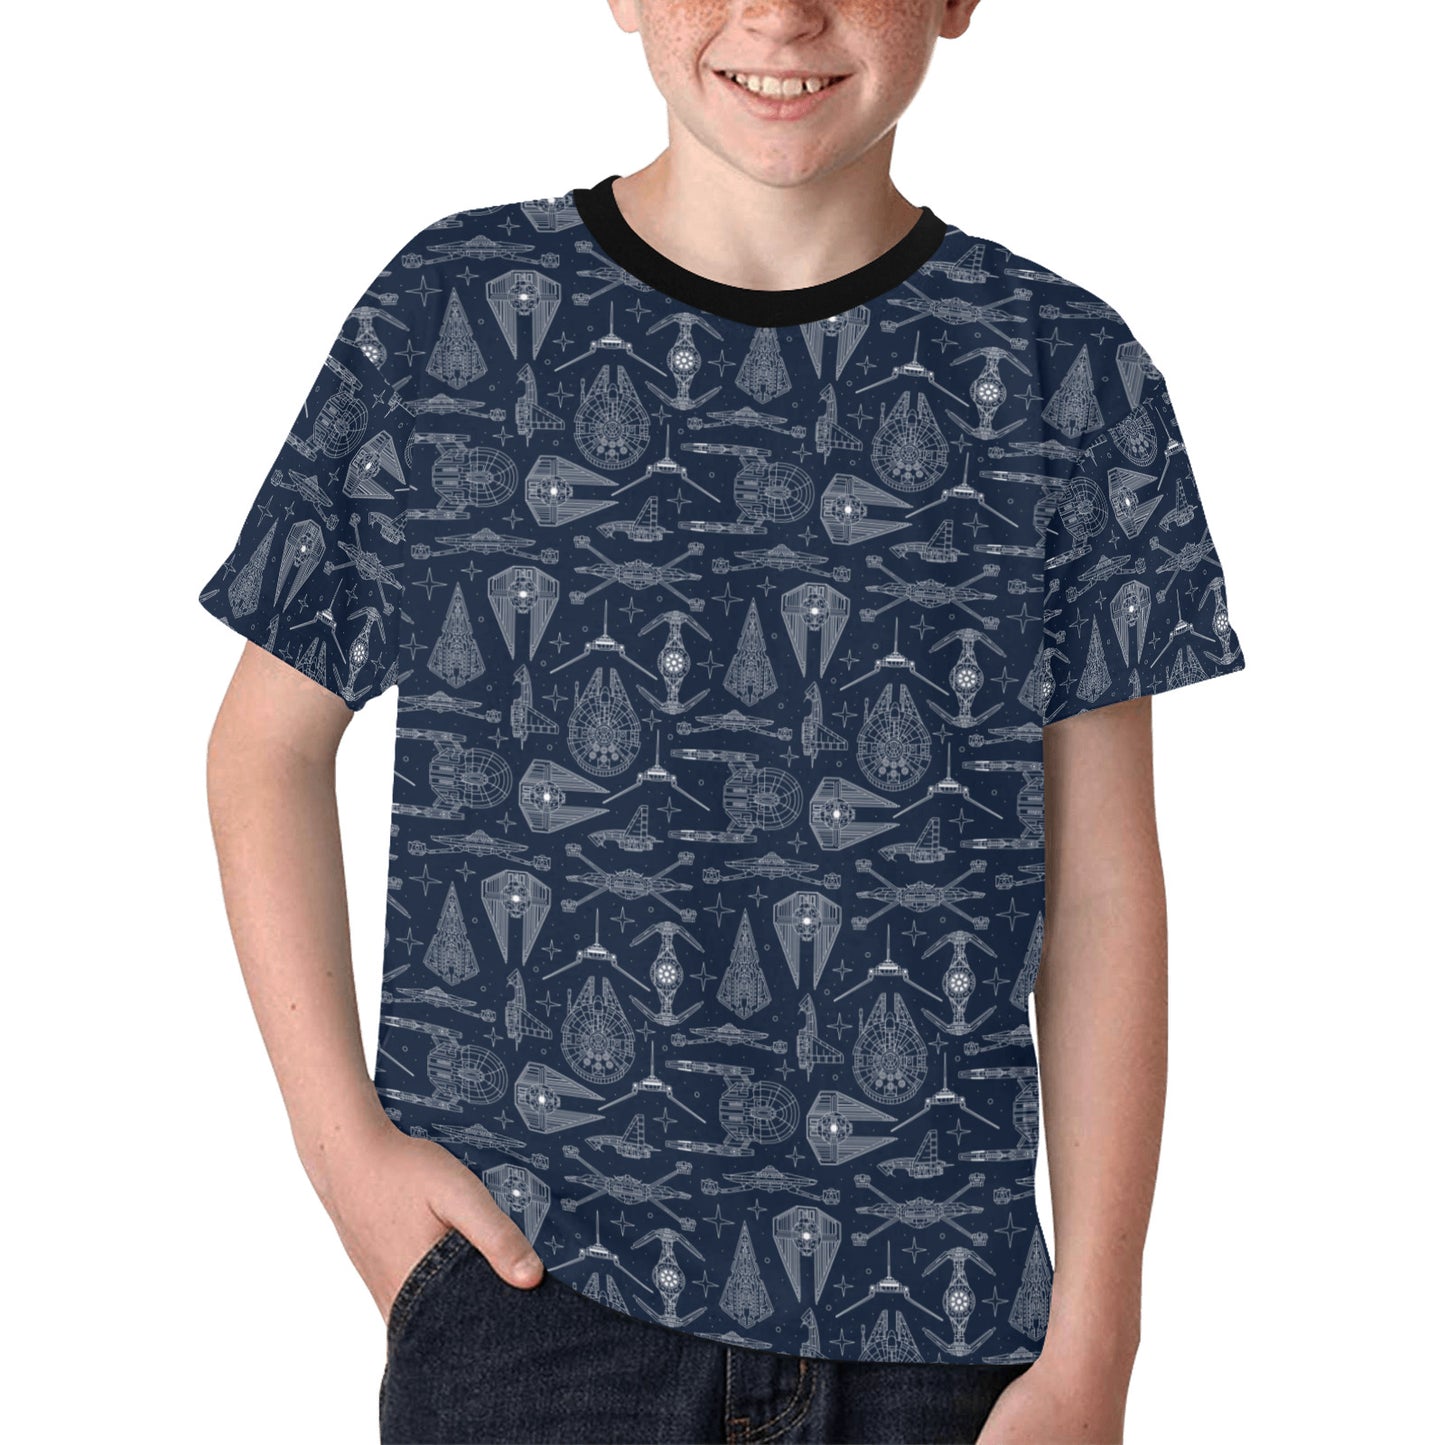 Galactic Blue Prints Kids' T-shirt